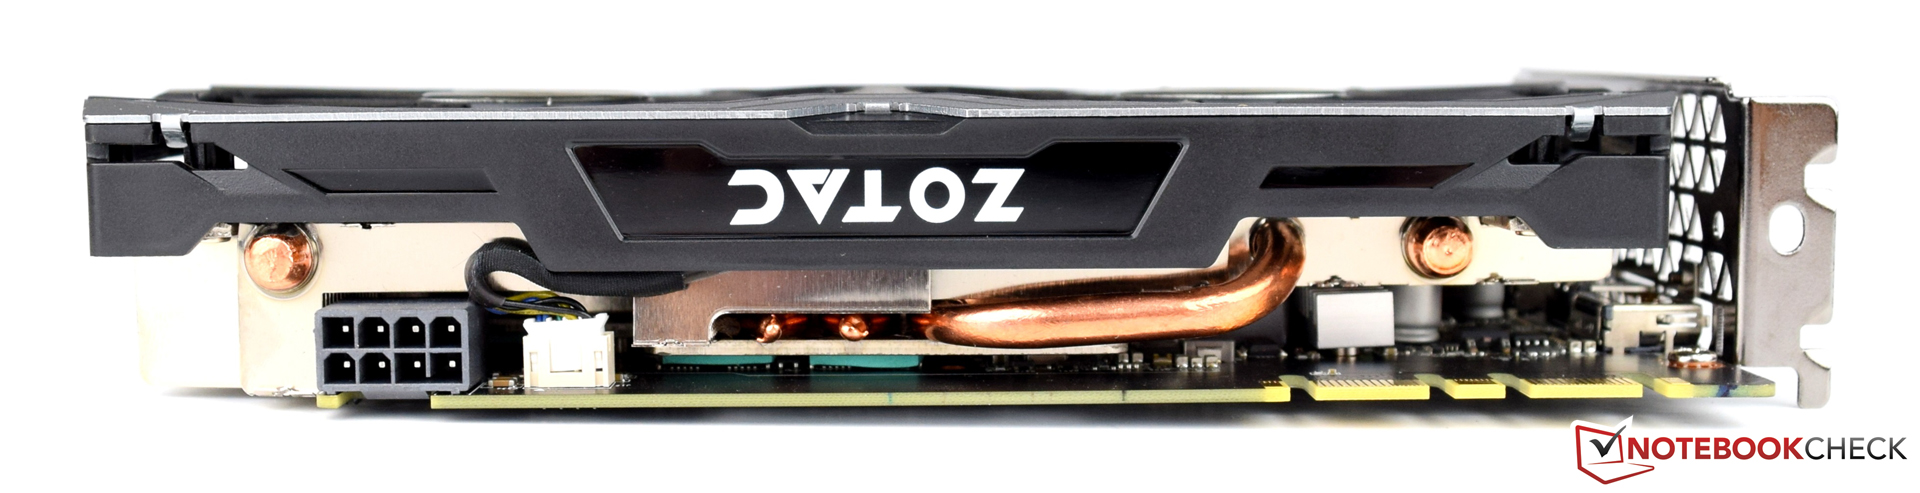 Zotac GeForce GTX 1070 Mini Graphics Card SLI Configuration Review 